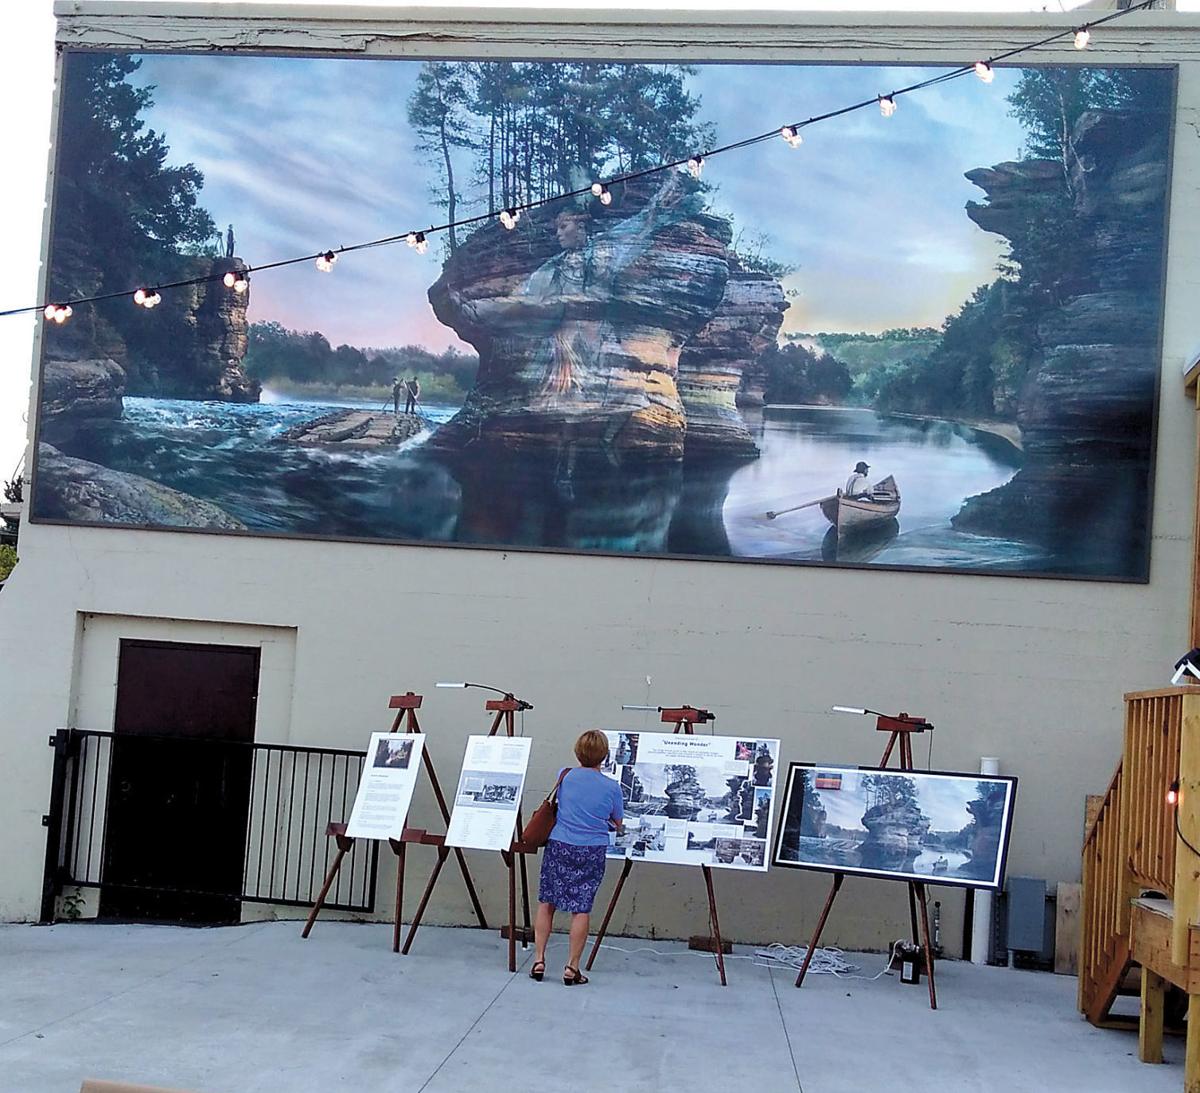 Dells Riverfront Terrace Opens Displays Mural Regional News Wiscnews Com